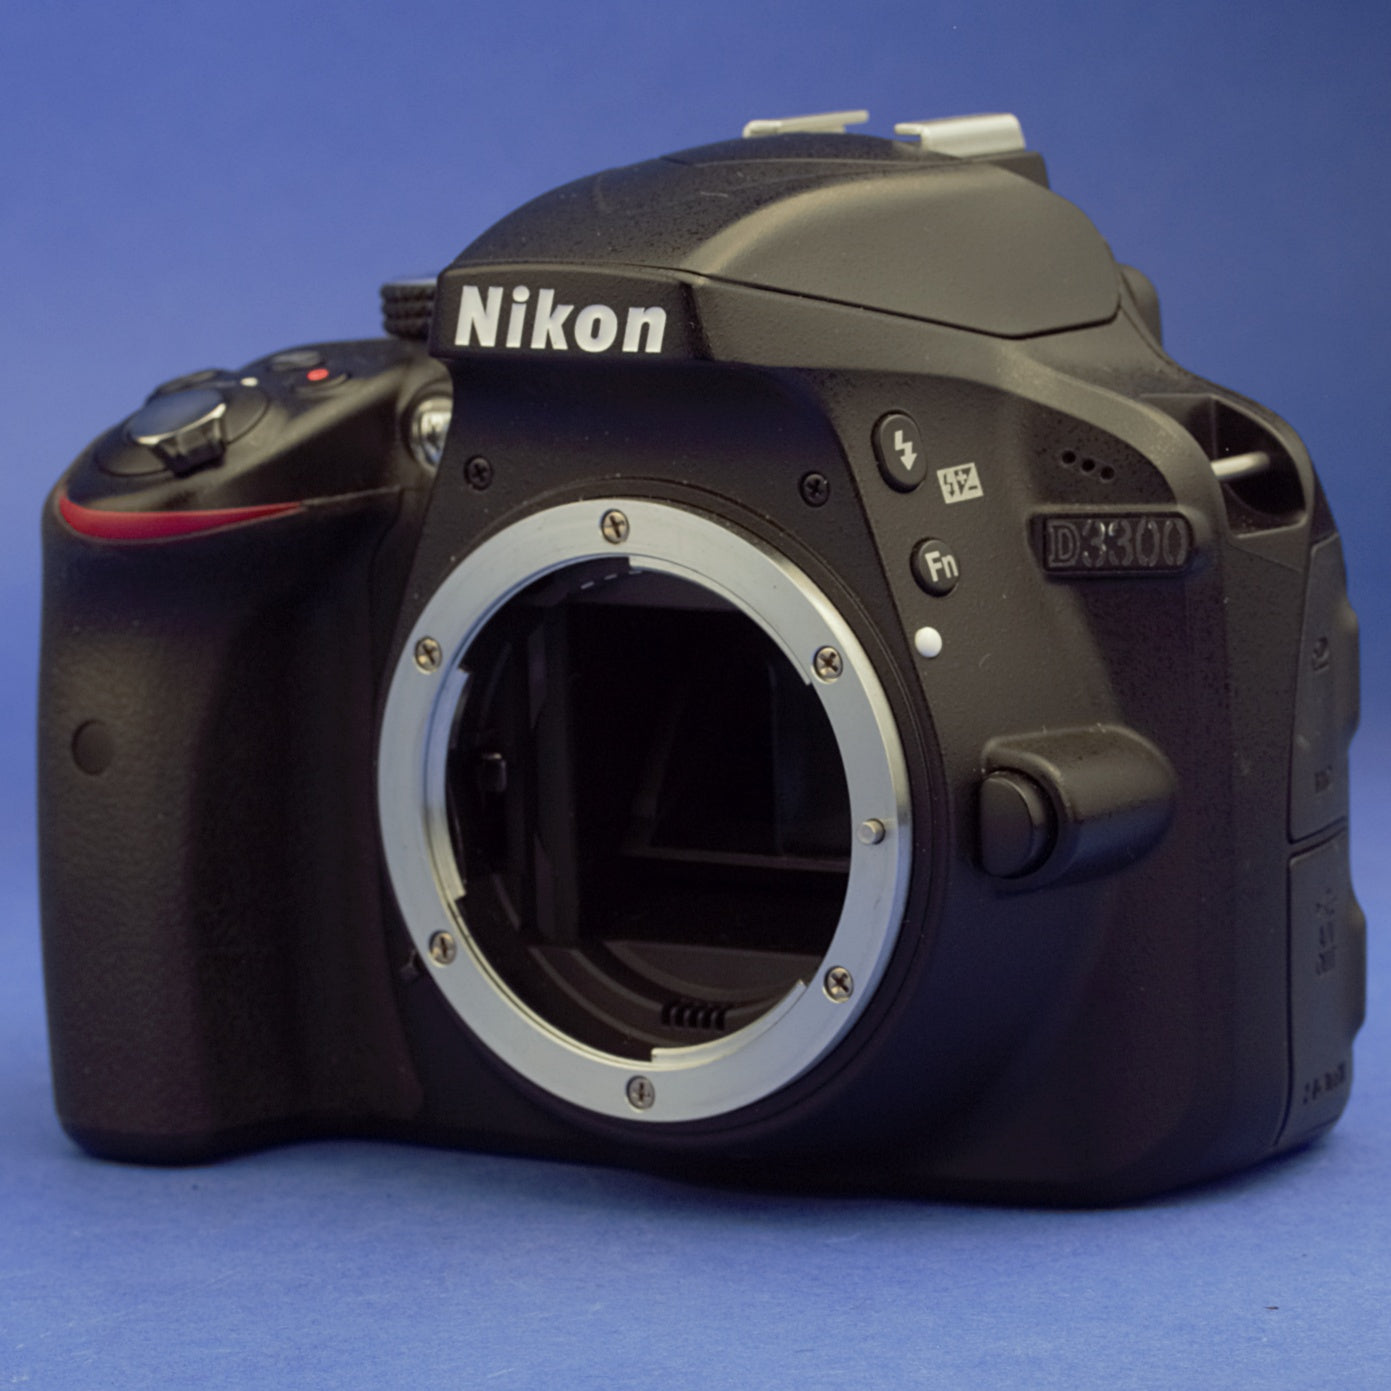 Nikon D3300 Digital Camera Body